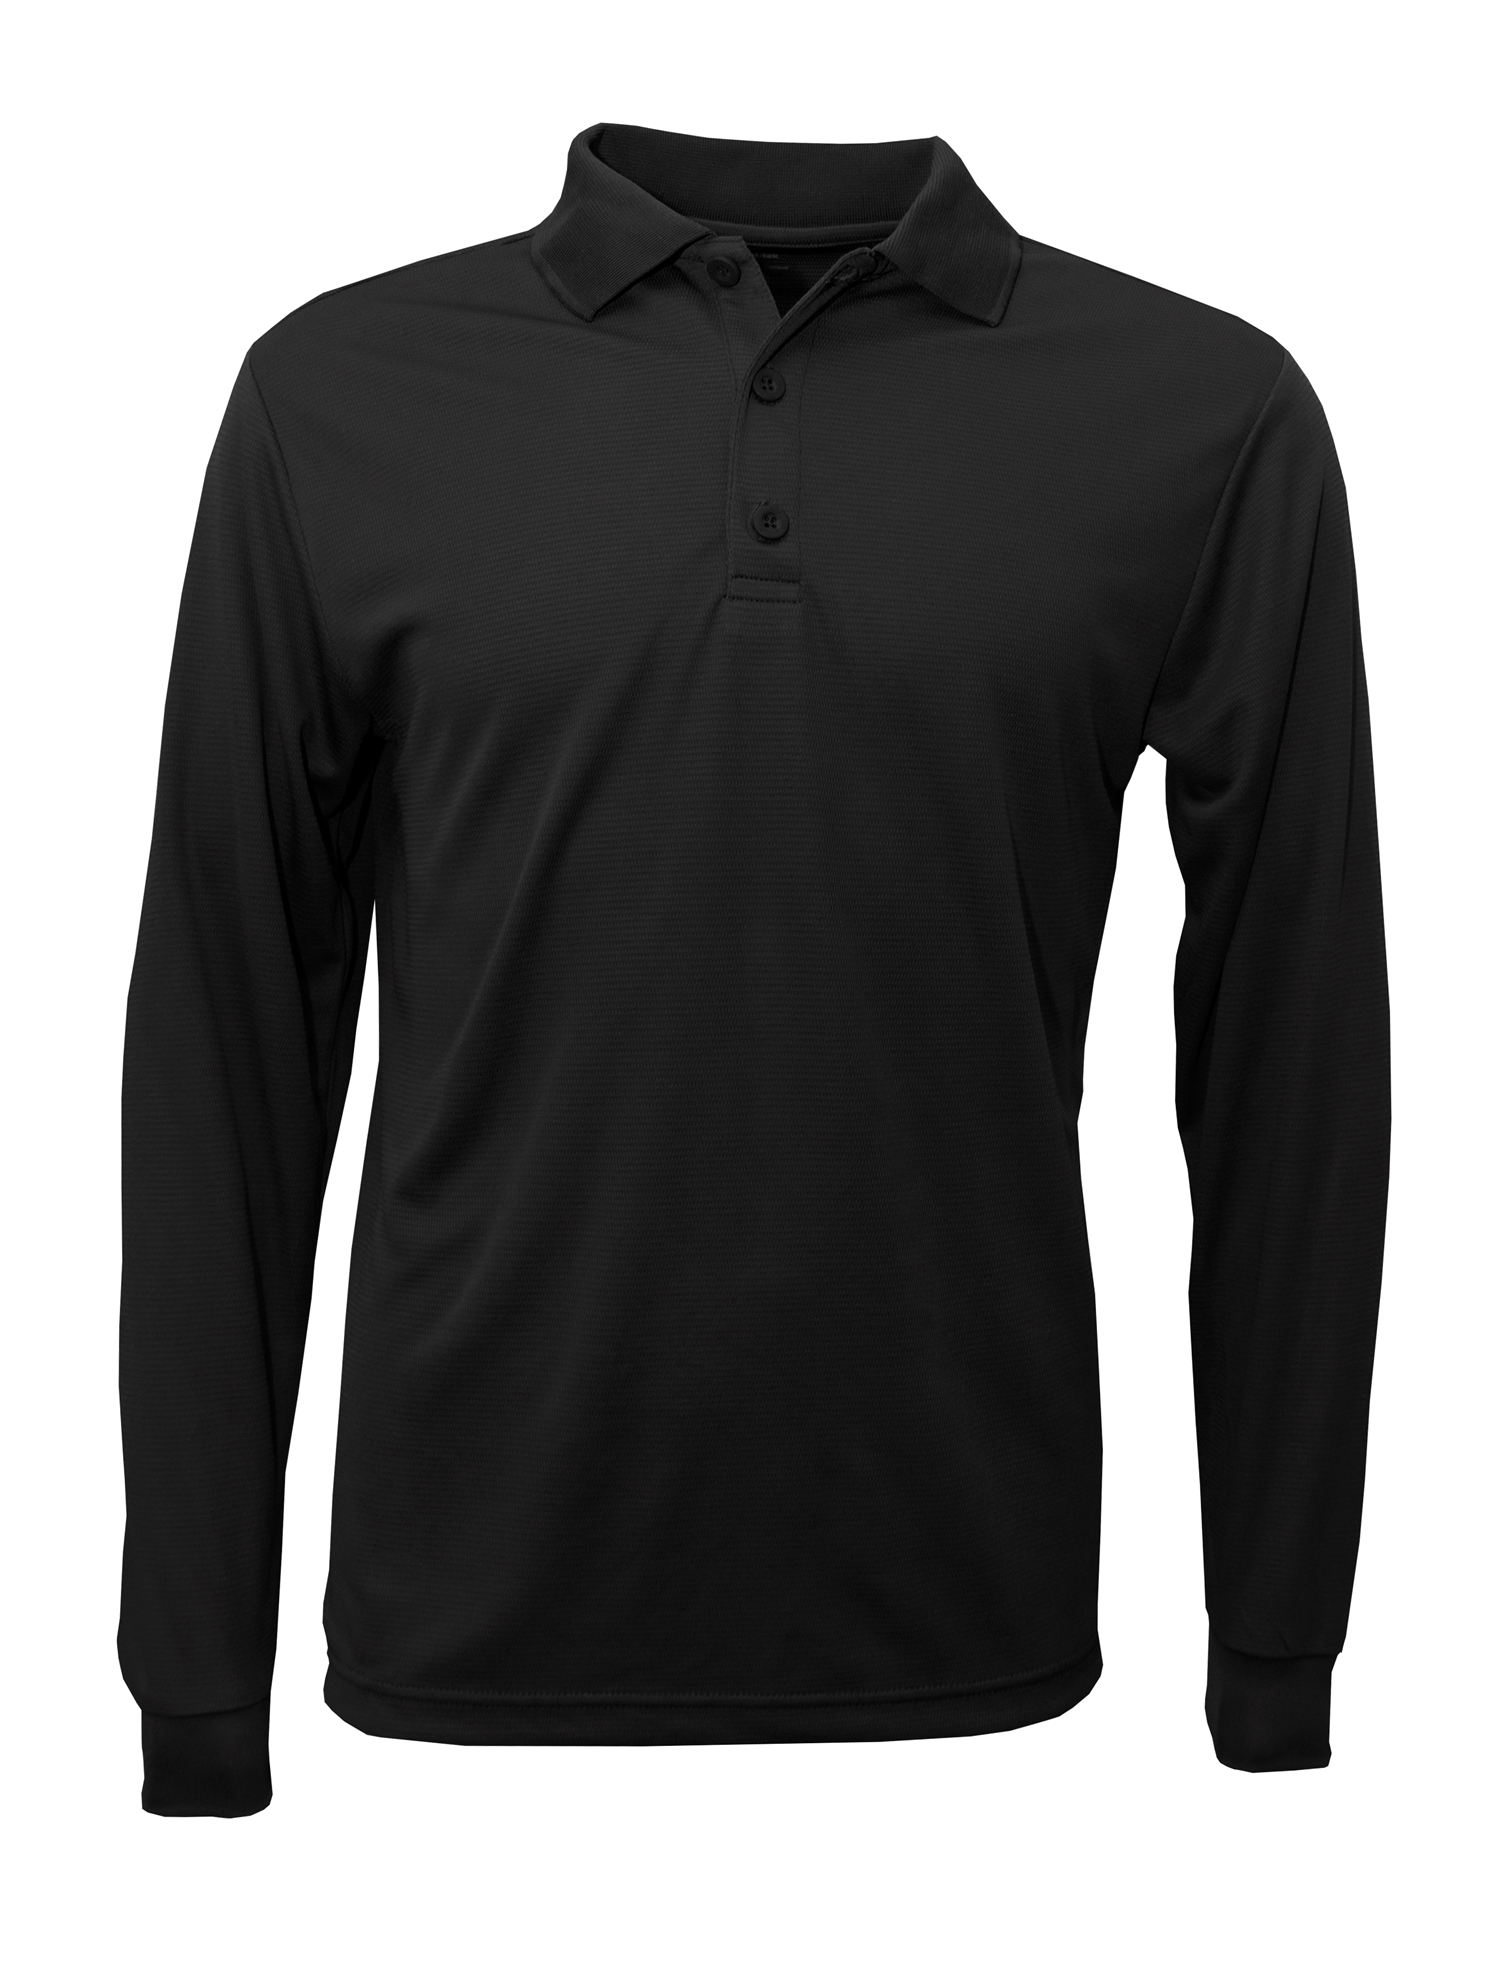 BAW Athletic Wear EC409Y - Youth ECO Cool-tek Long Sleeve Polo Shirt